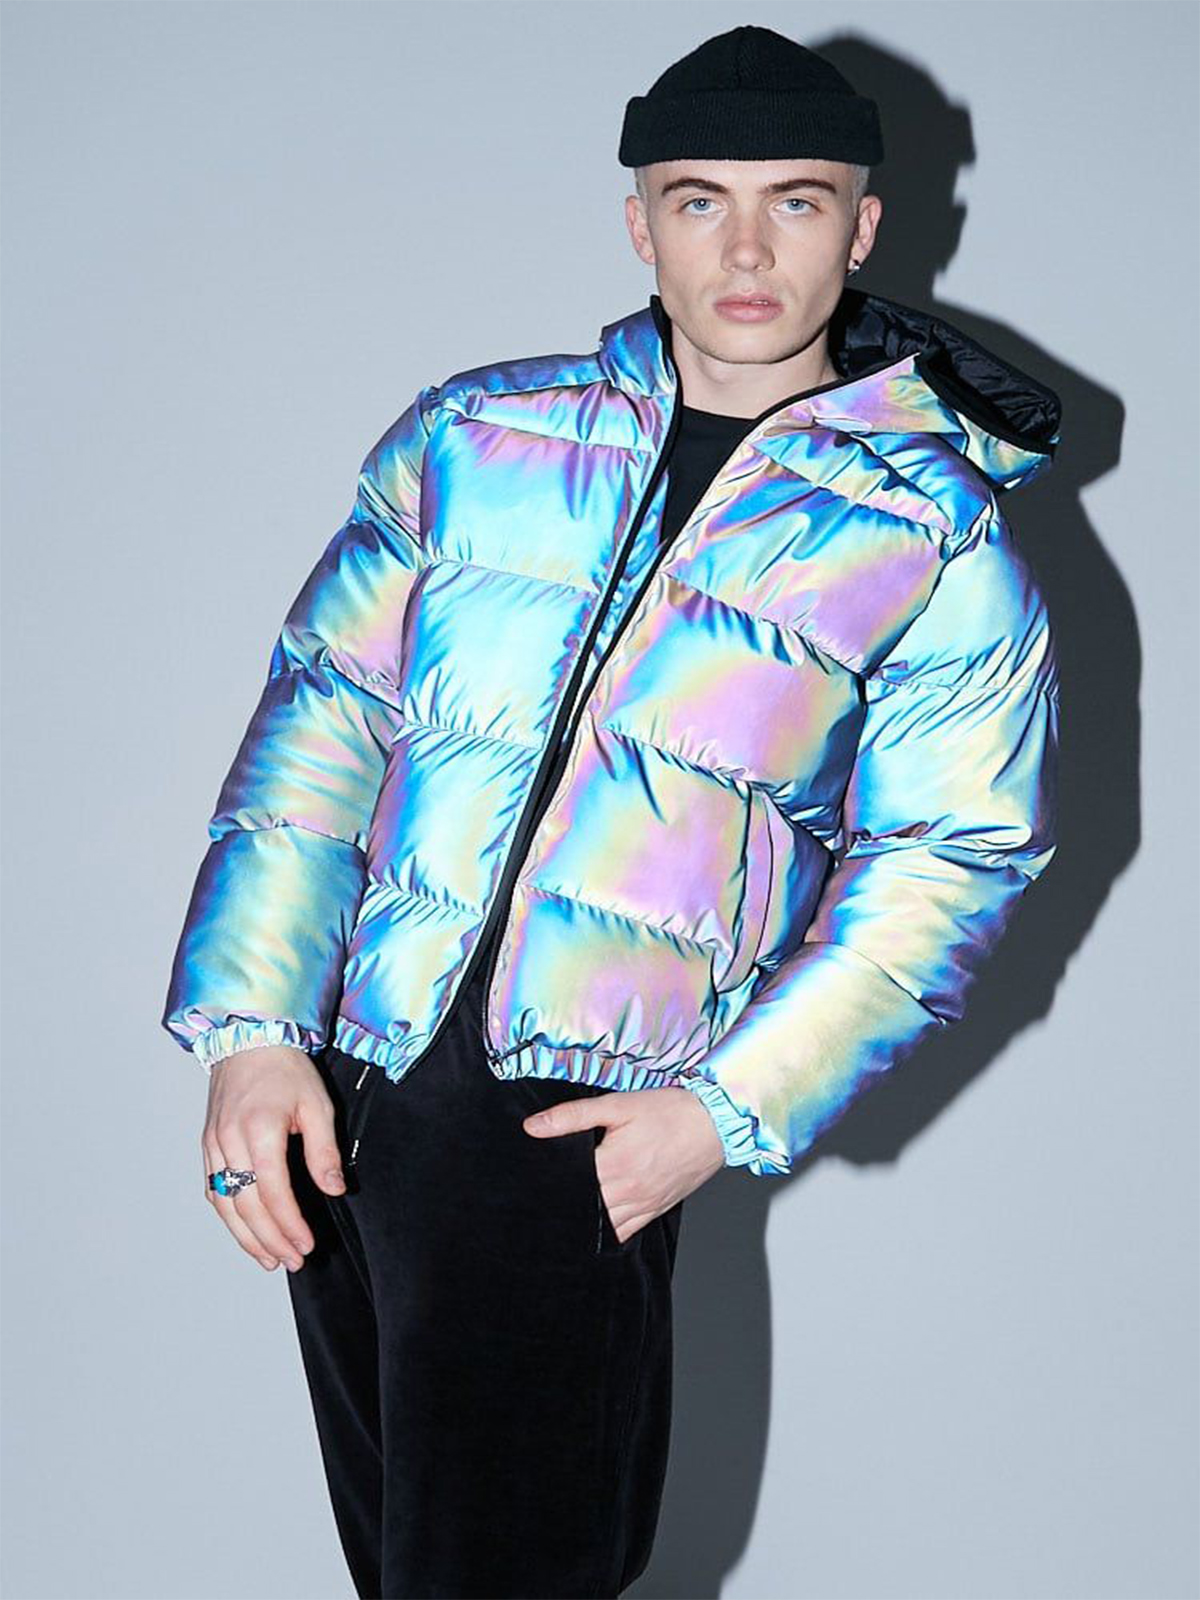 Sole Boy Rainbow Reflective Iridescent Puffer Jacket